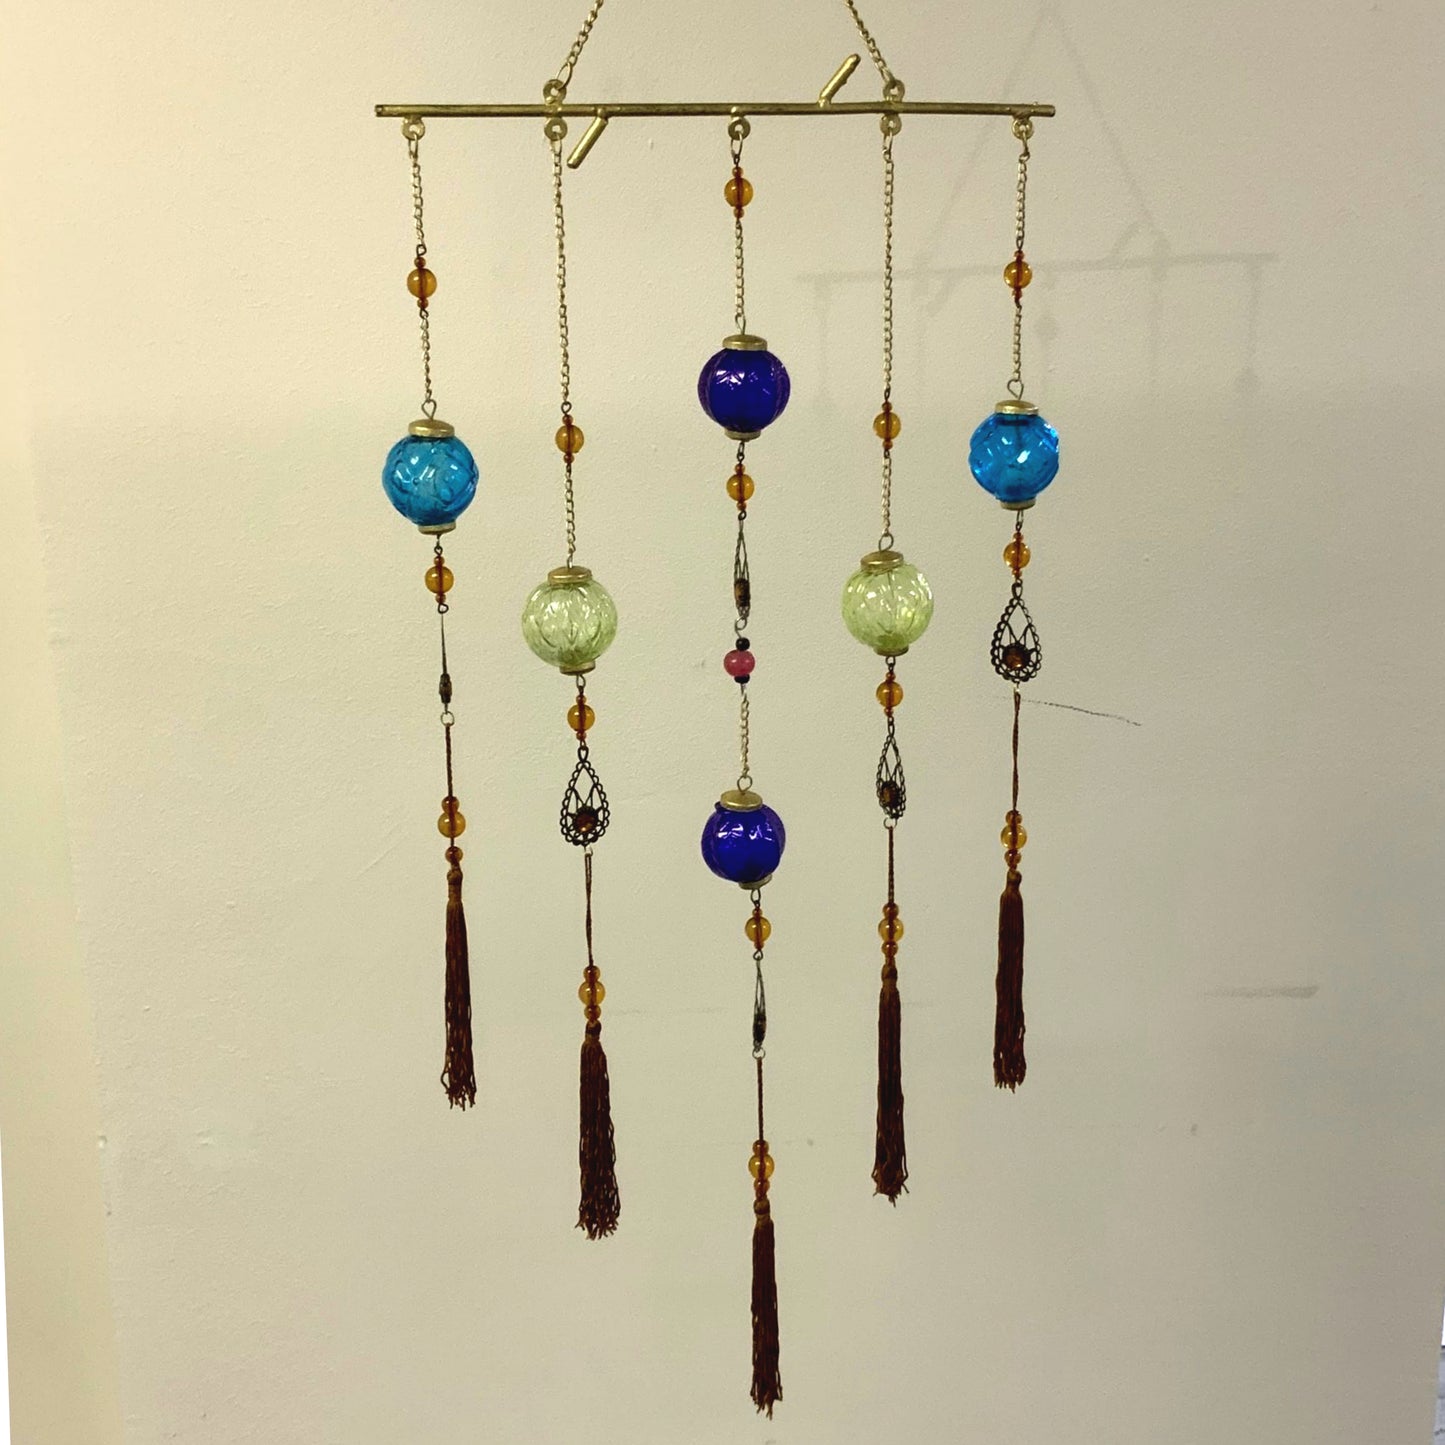 Hanging Gypsy Glass Globe Suncatcher with Glass Beads & Tassels